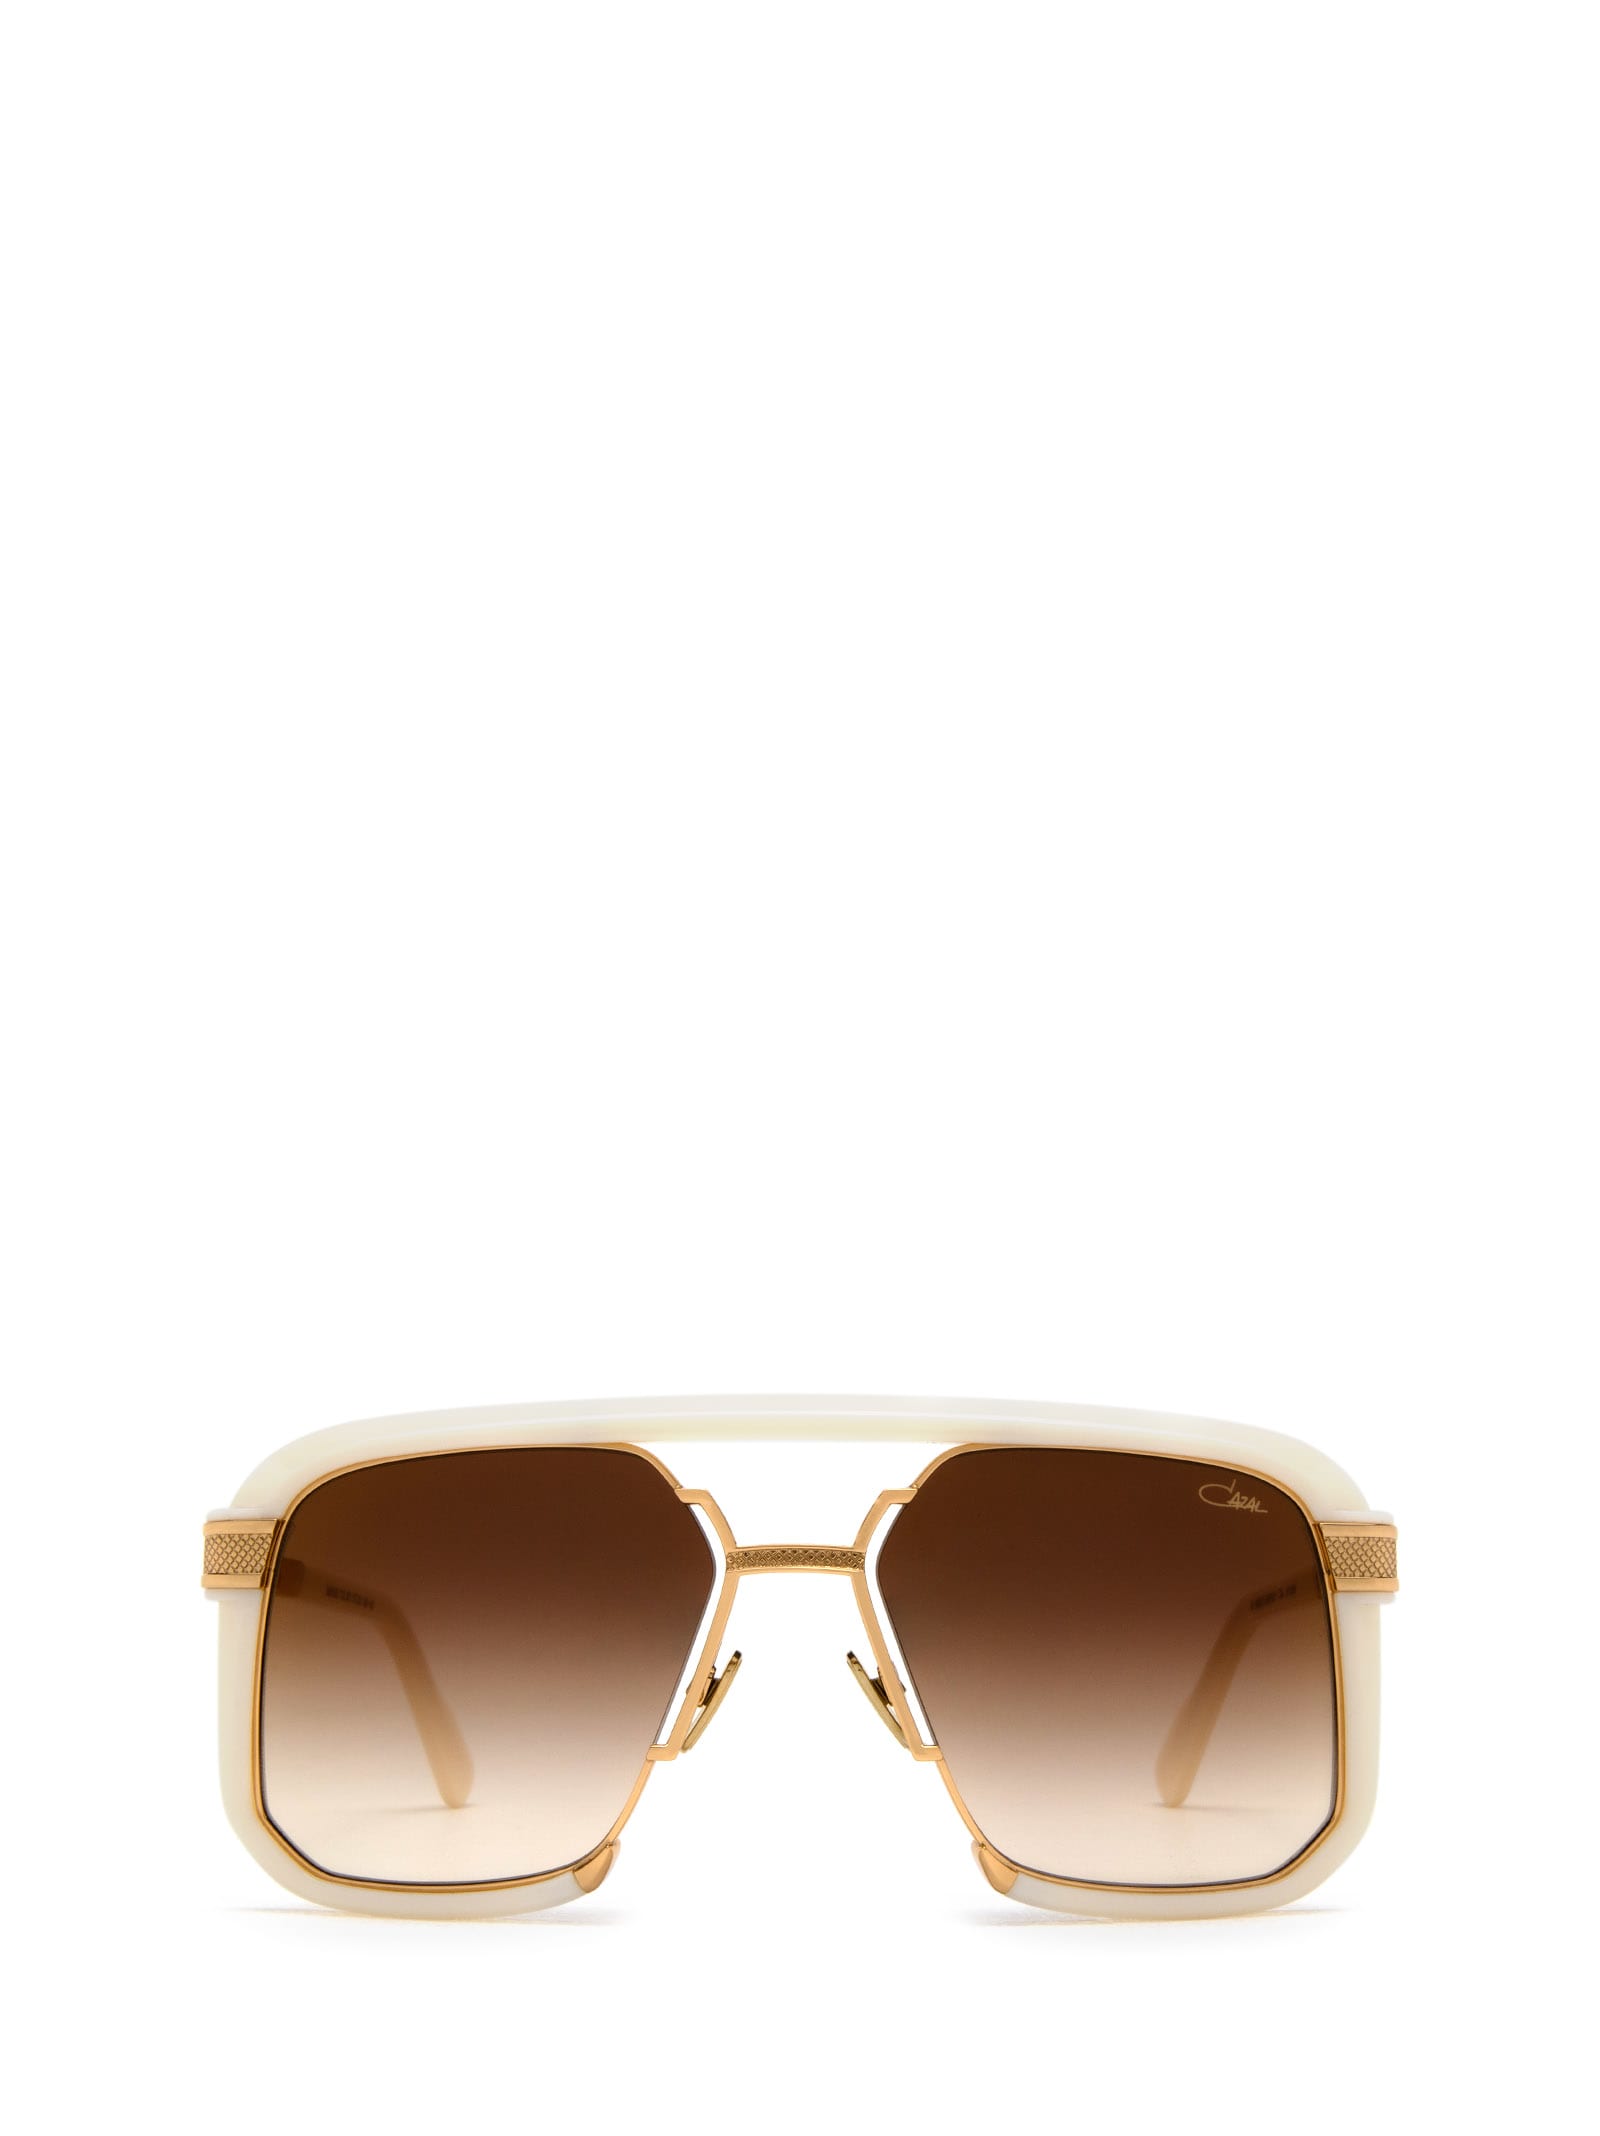 Cazal 682 Milky White - Gold Sunglasses